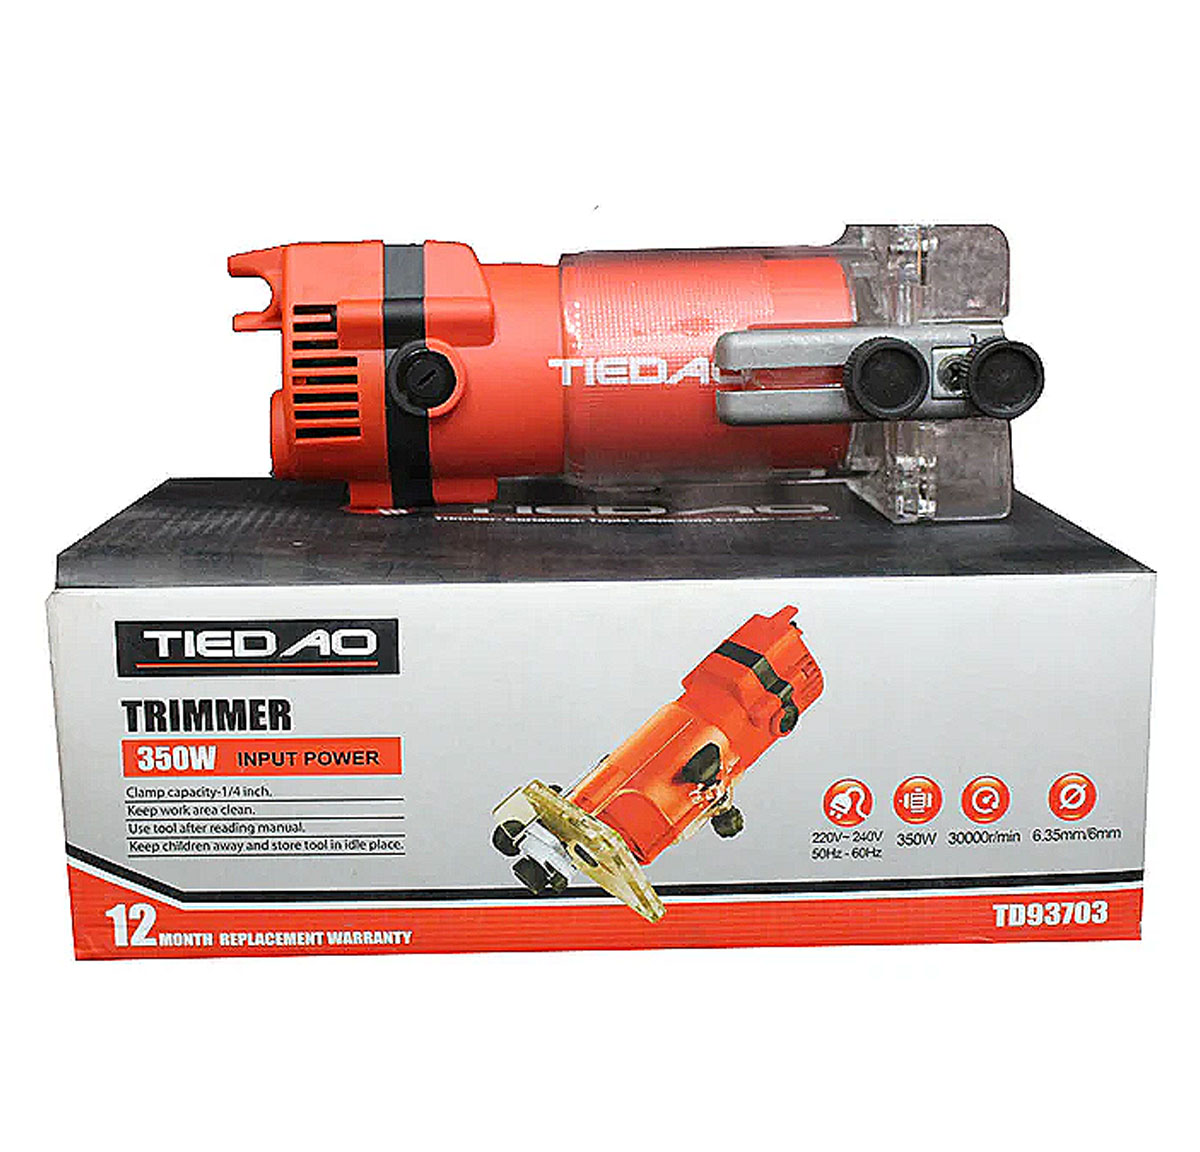 TIEDAO 6MM ELECTRIC TRIMMER TD93703 - 350WATTS - 100% COPPER WINDING - HEAVY DUTY